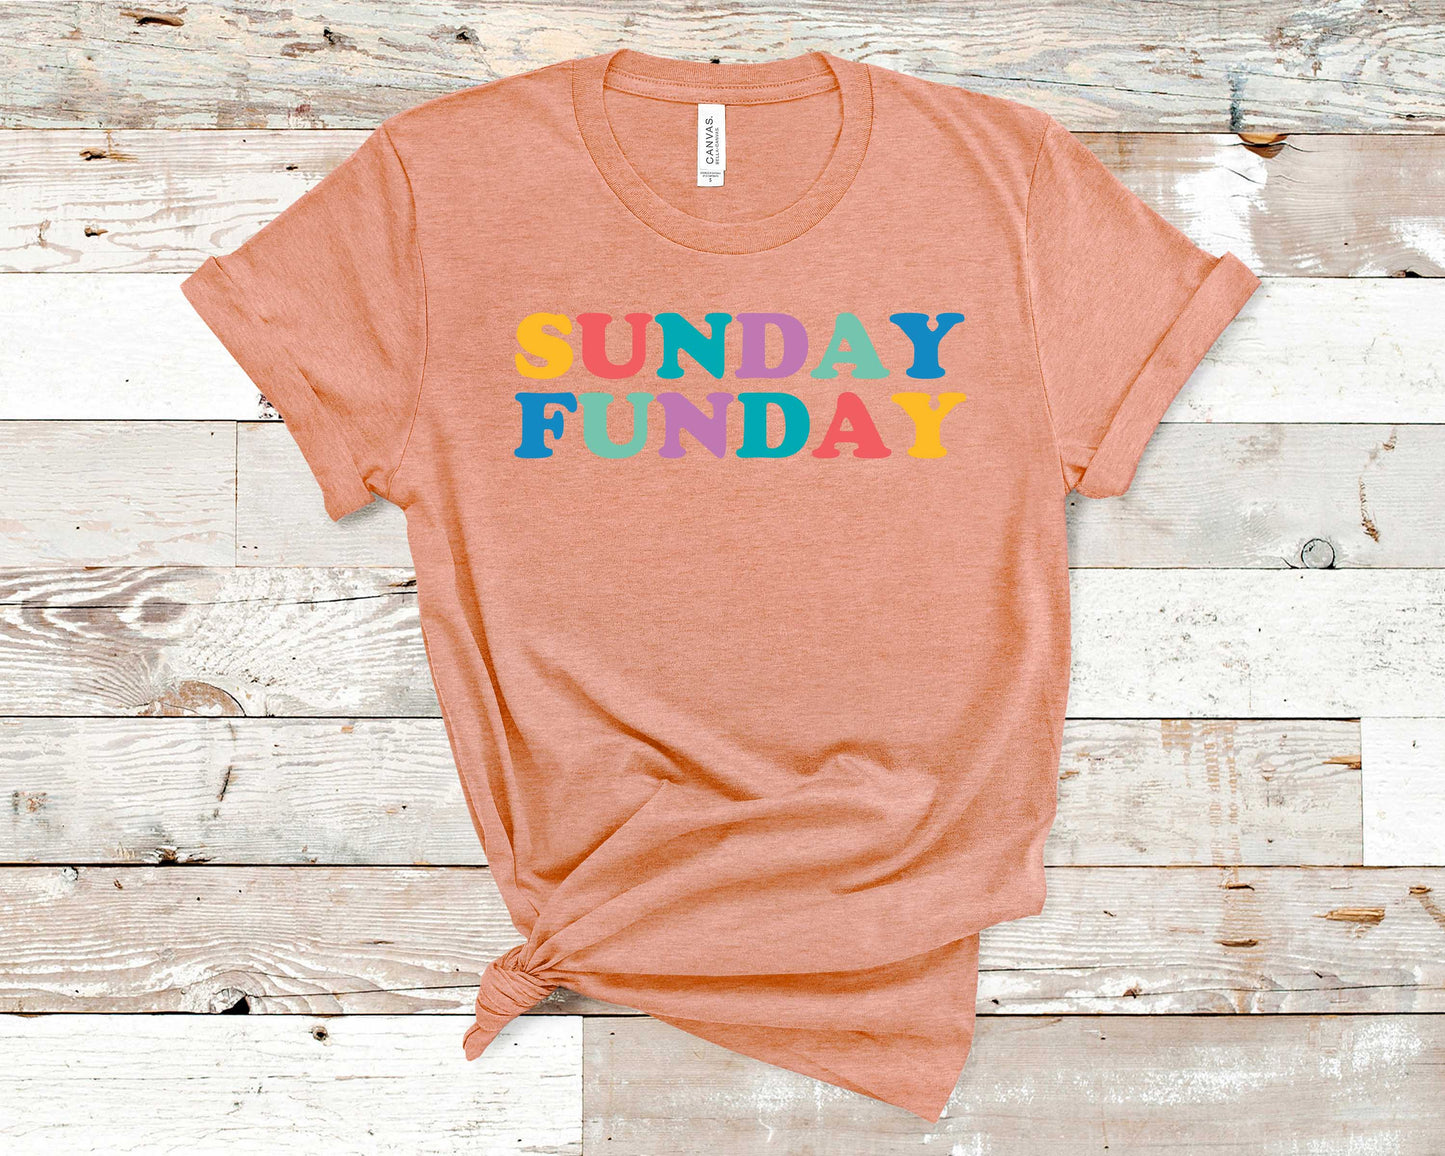 Sunday Funday - Trendy